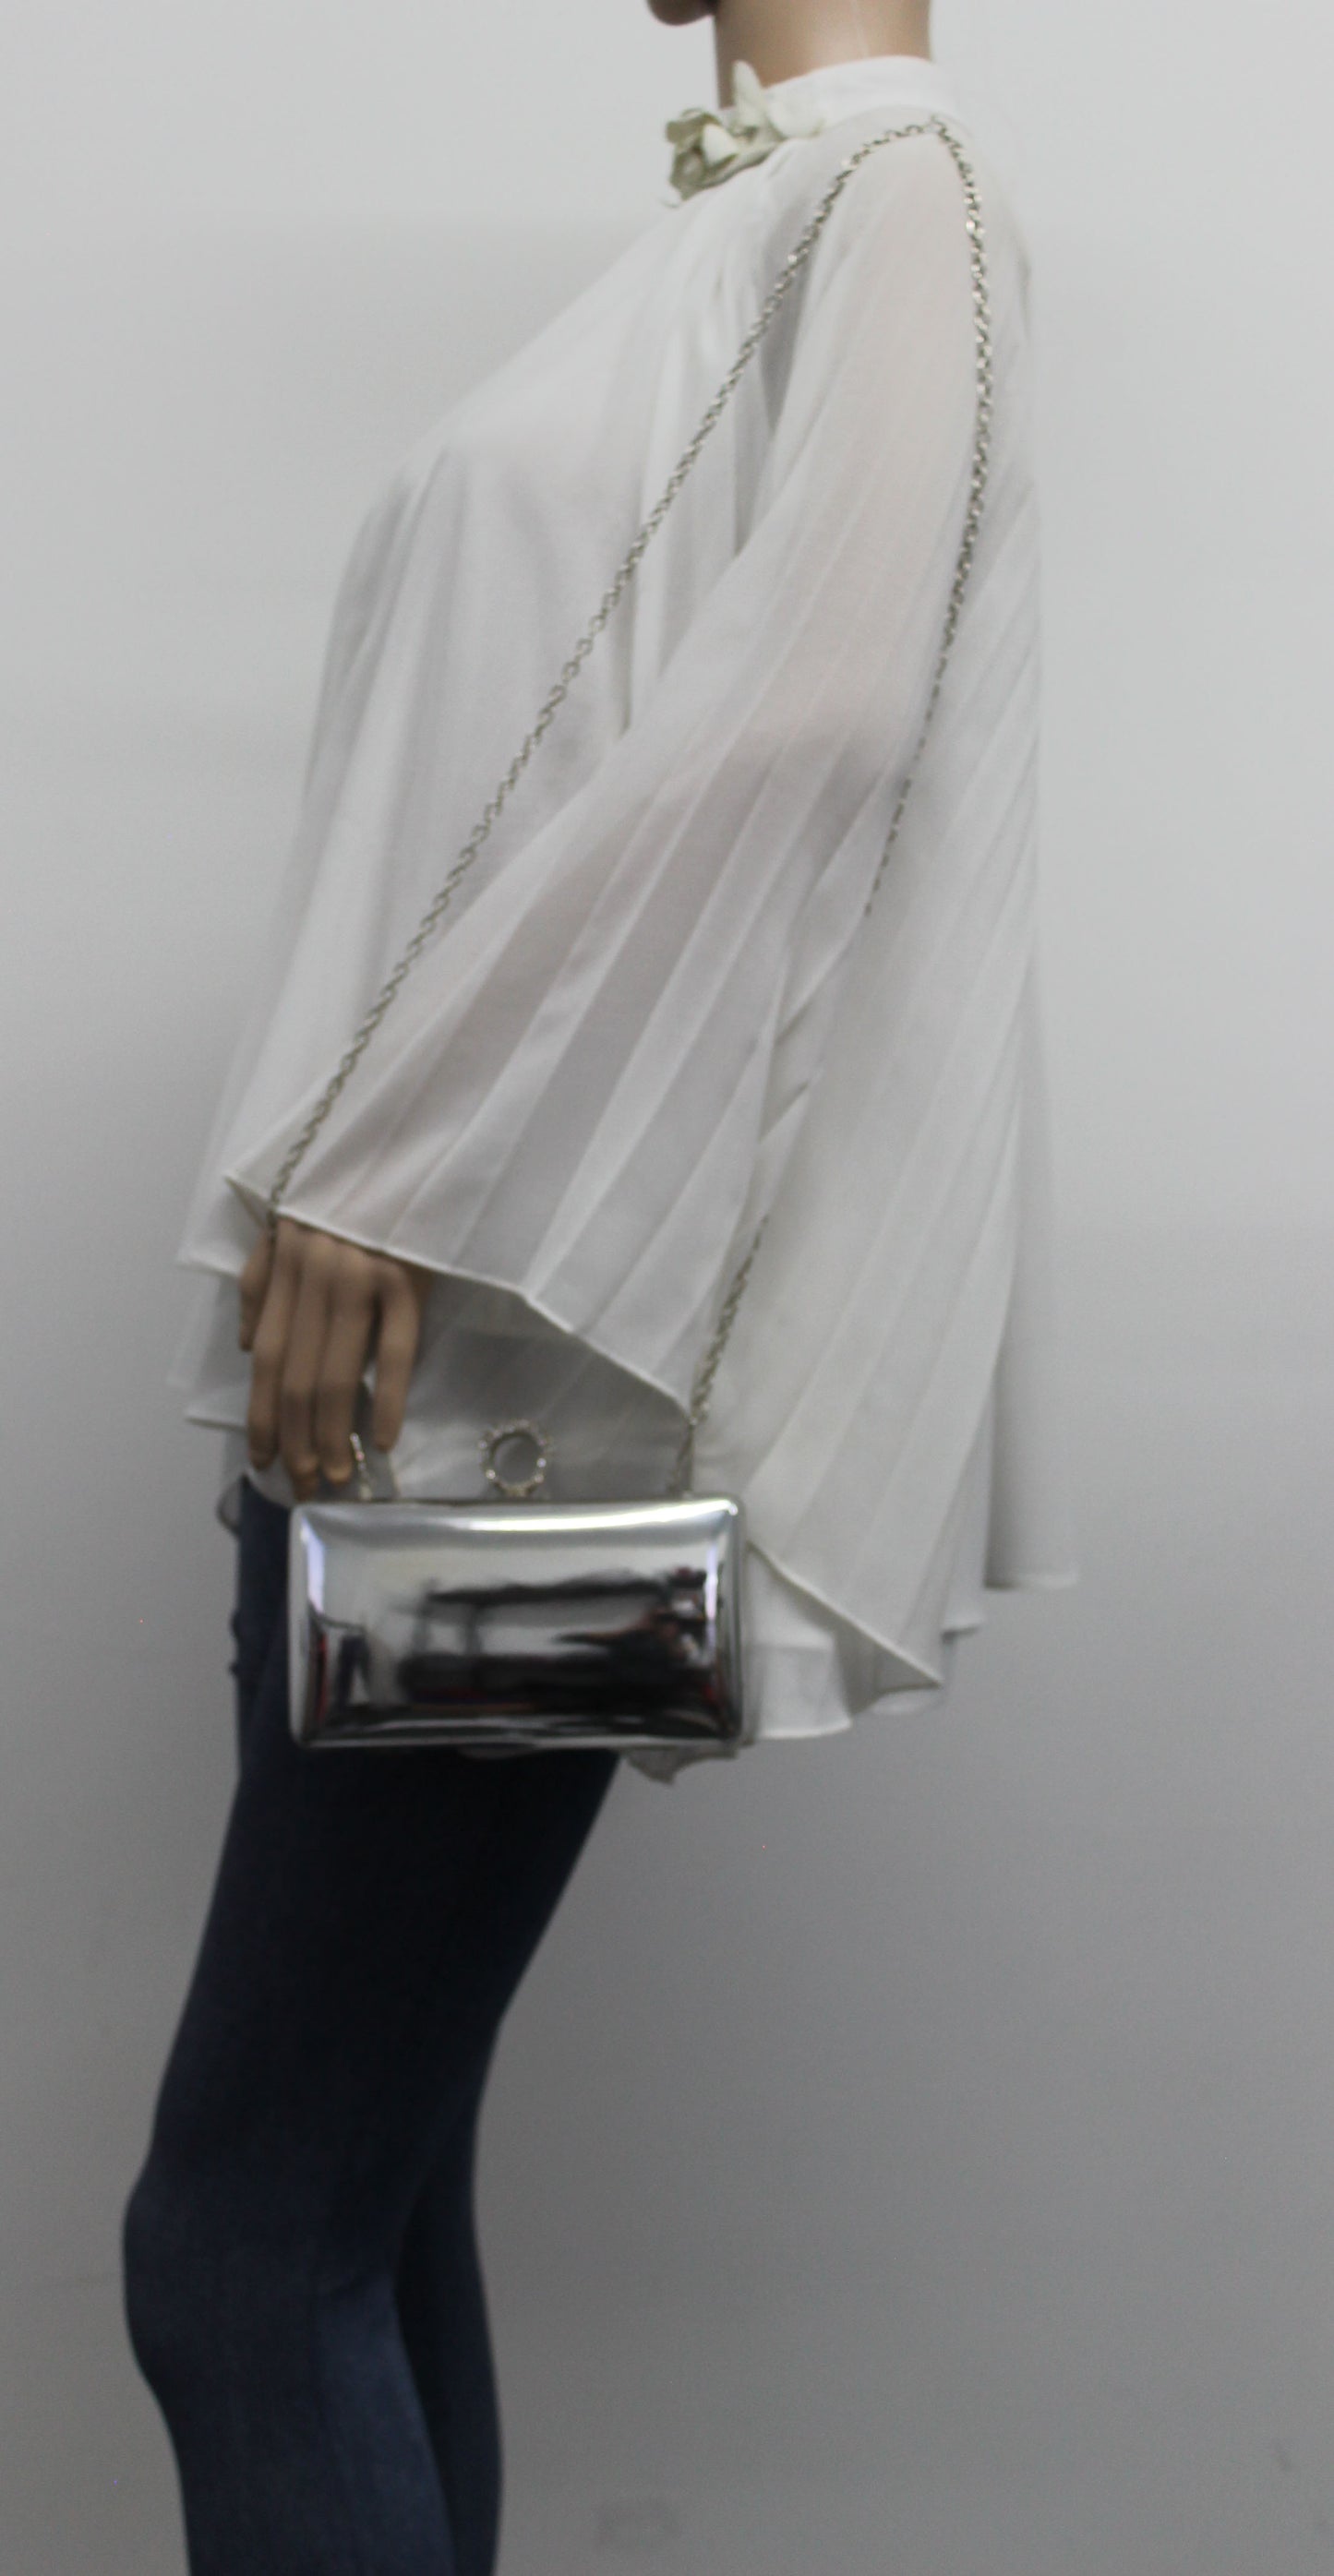 SWANKYSWANS Lyla Patent Clutch Bag Silver Cute Cheap Clutch Bag For Weddings School and Work